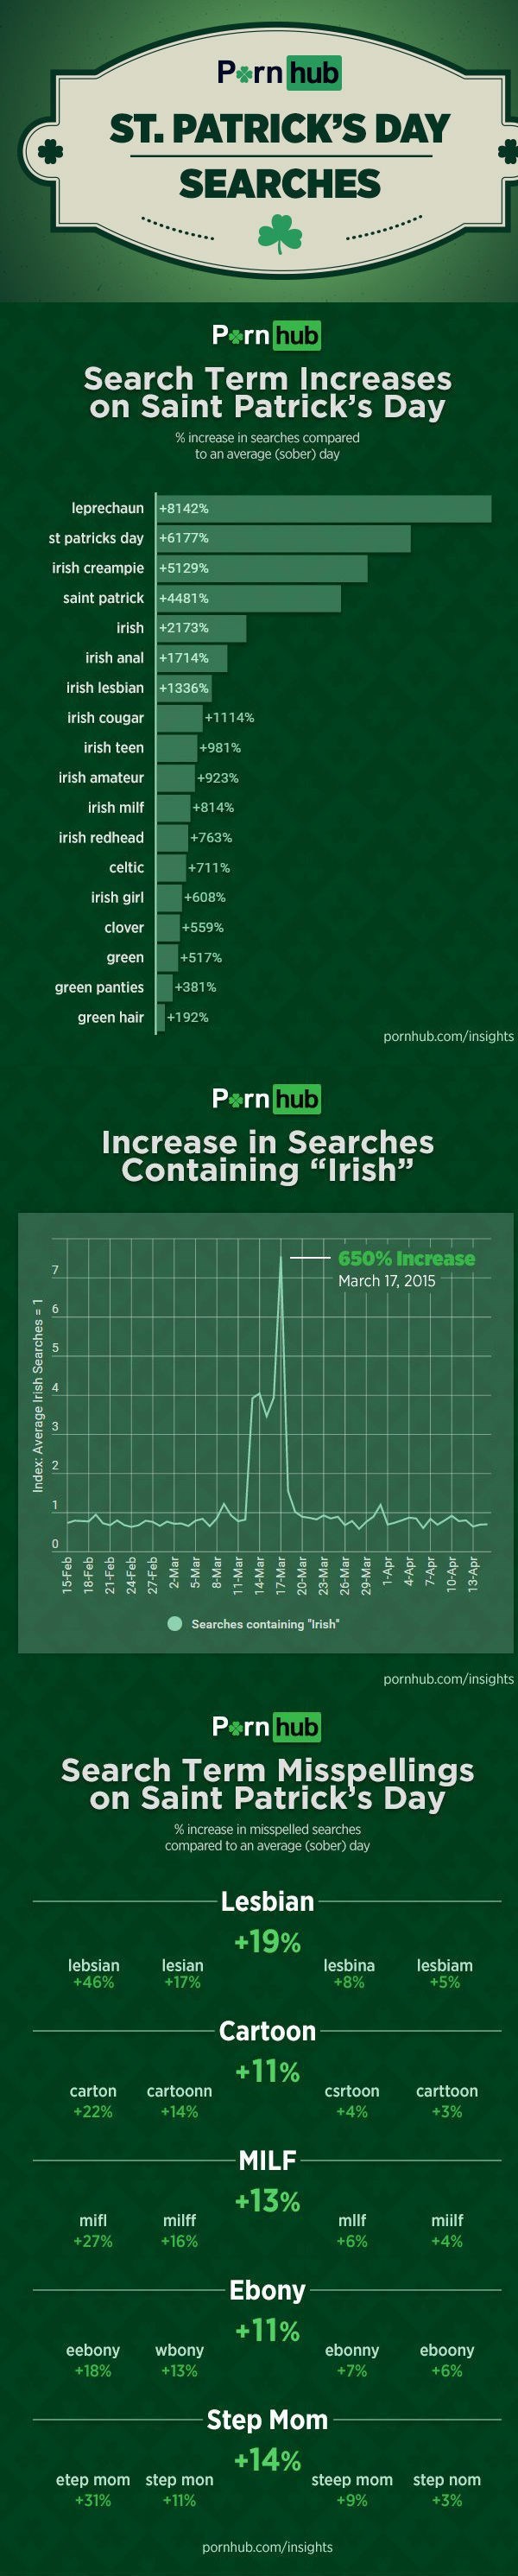 st patrick's day memes - Pern hub St. Patrick'S Day Searches Pornhub Search Term Increases on Saint Patrick's Day % increase in searches compared to an average sober day leprechaun 8142% st patricks day 6177% irish creampie 5129% saint patrick 4481% irish